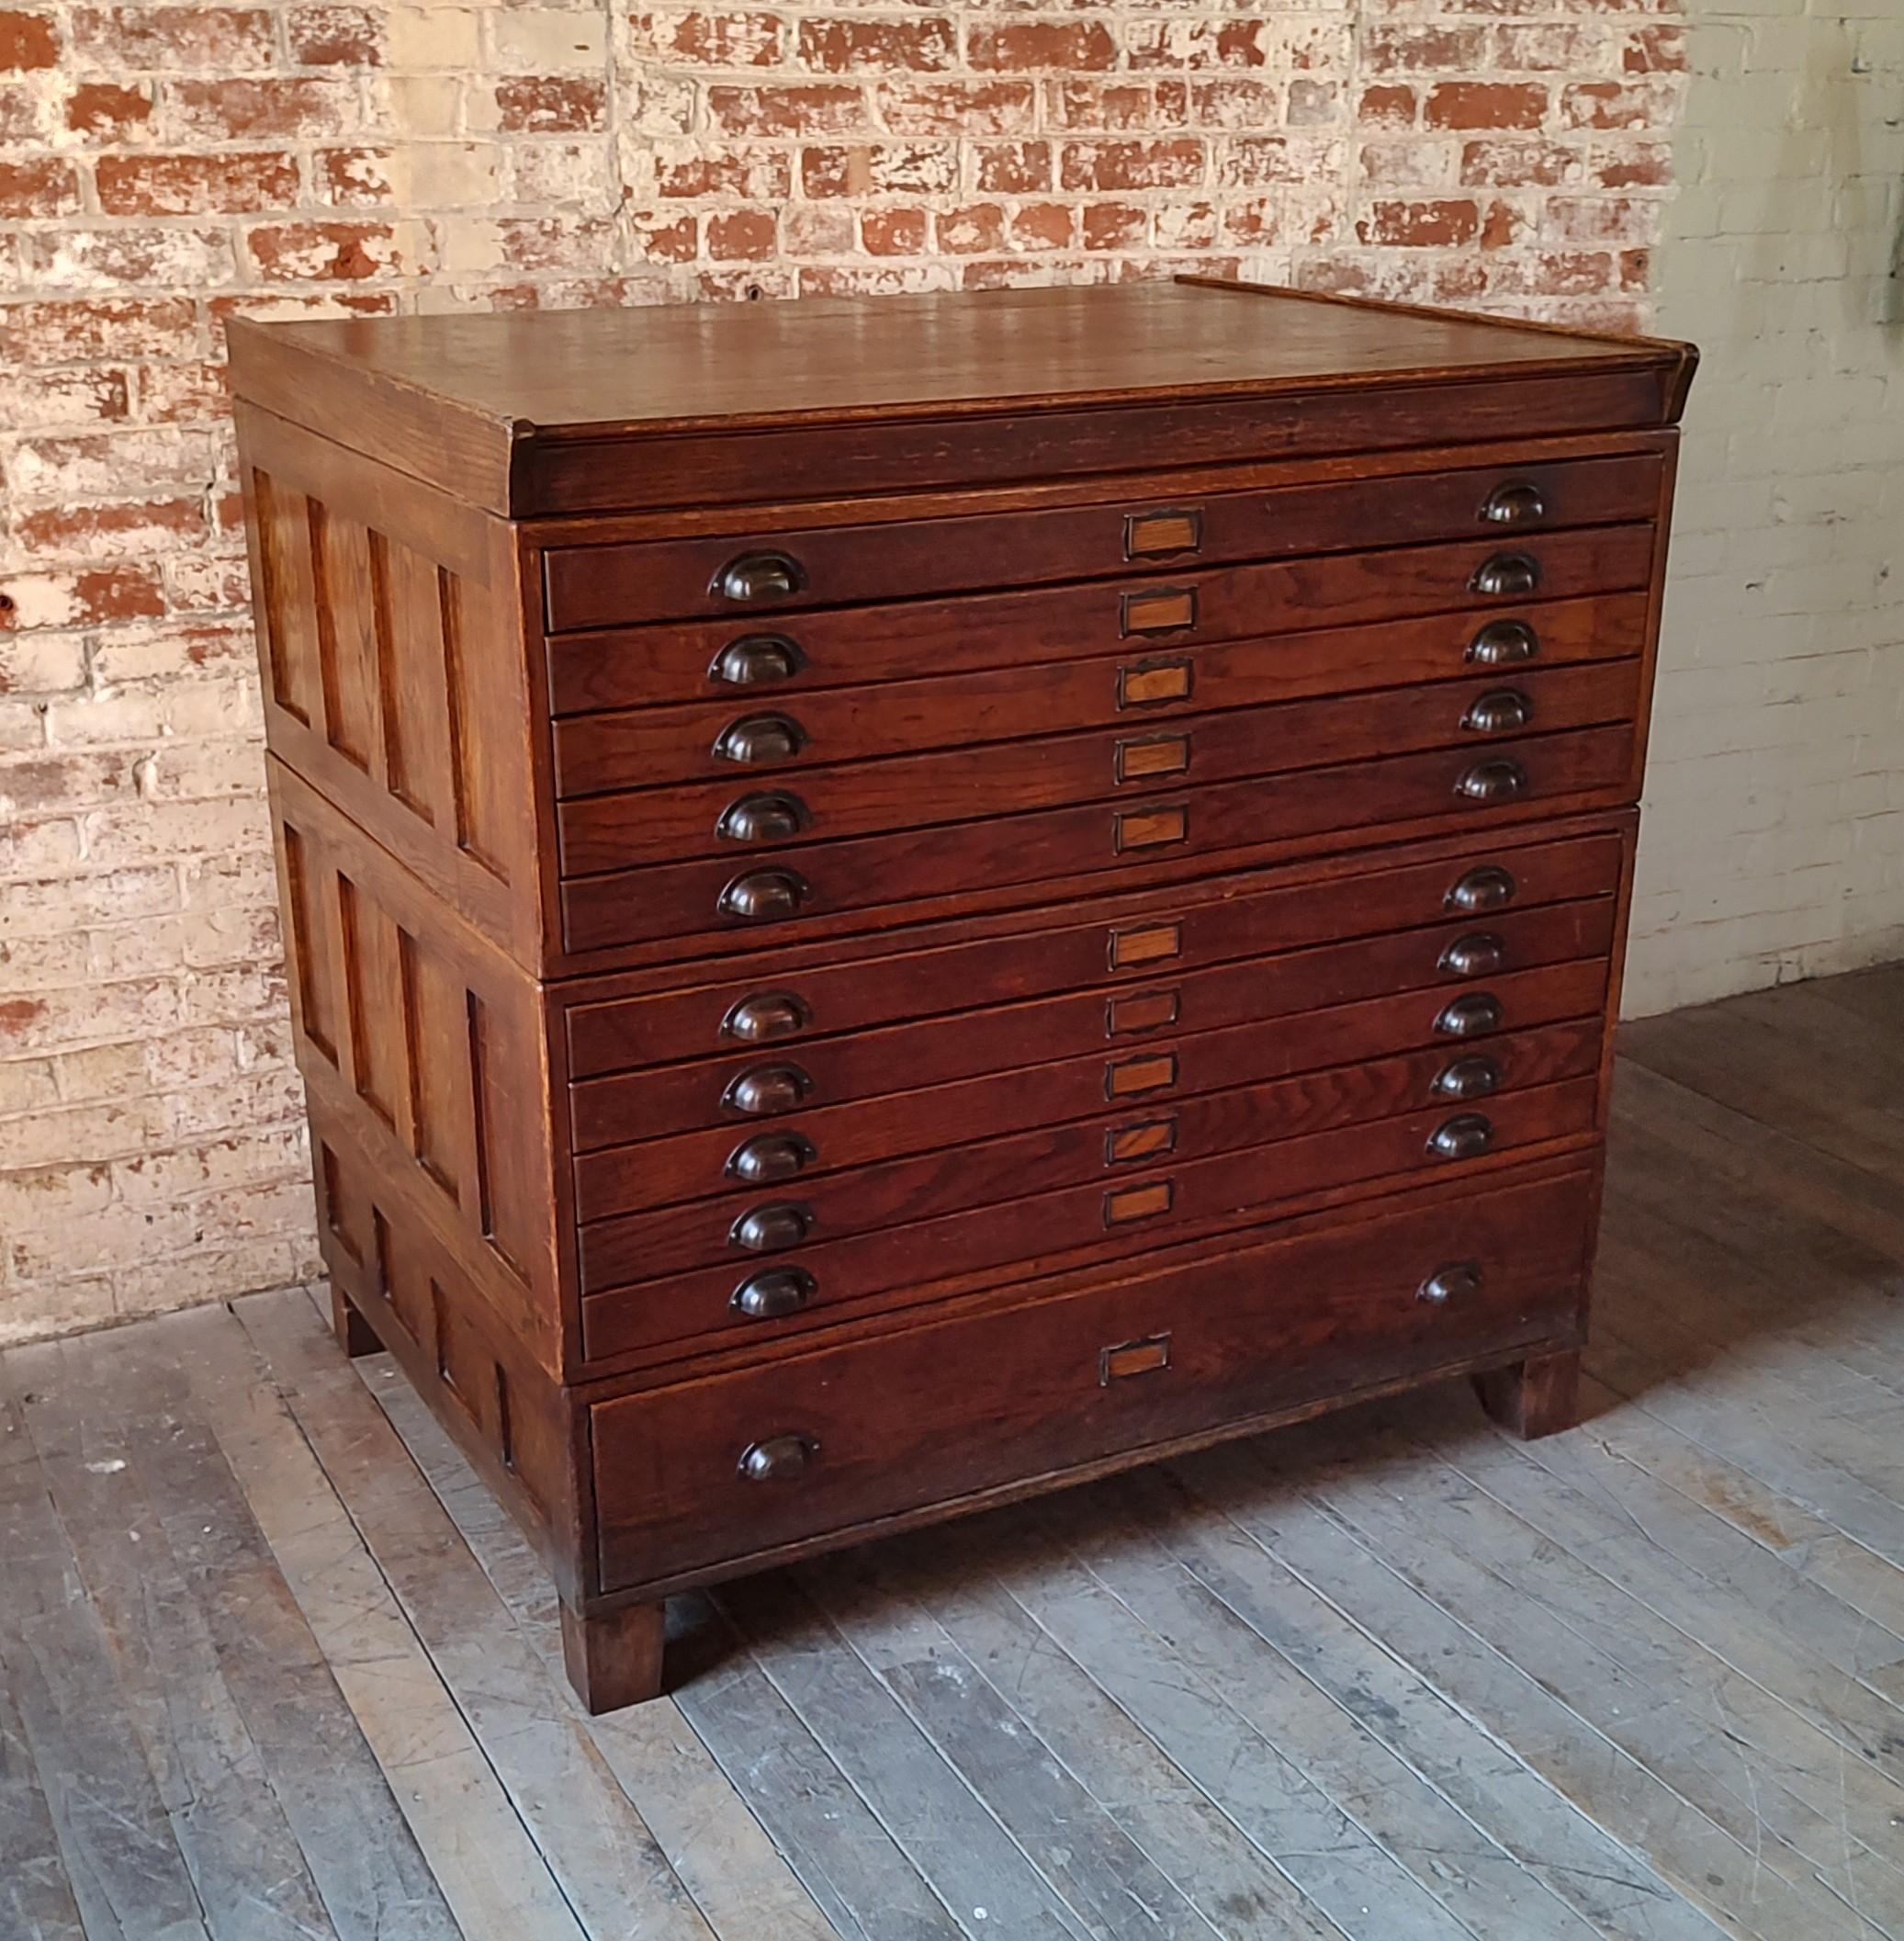 Vintage Oak Blueprint File Cabinet

Overall Dimensions: 35